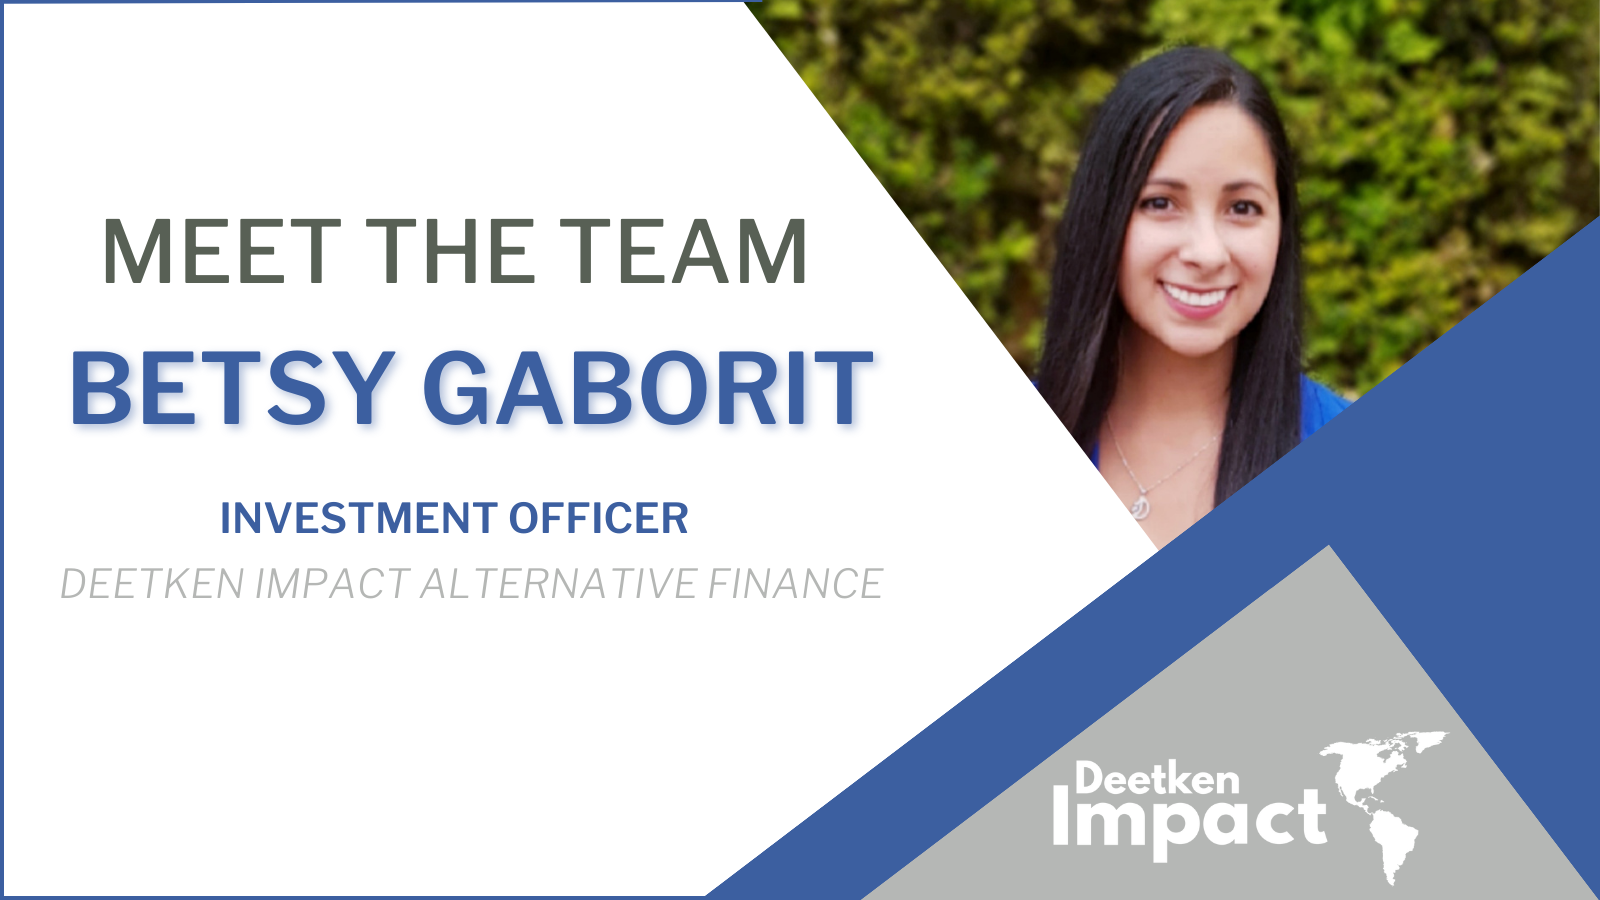 Meet the Team: Betsy Gaborit